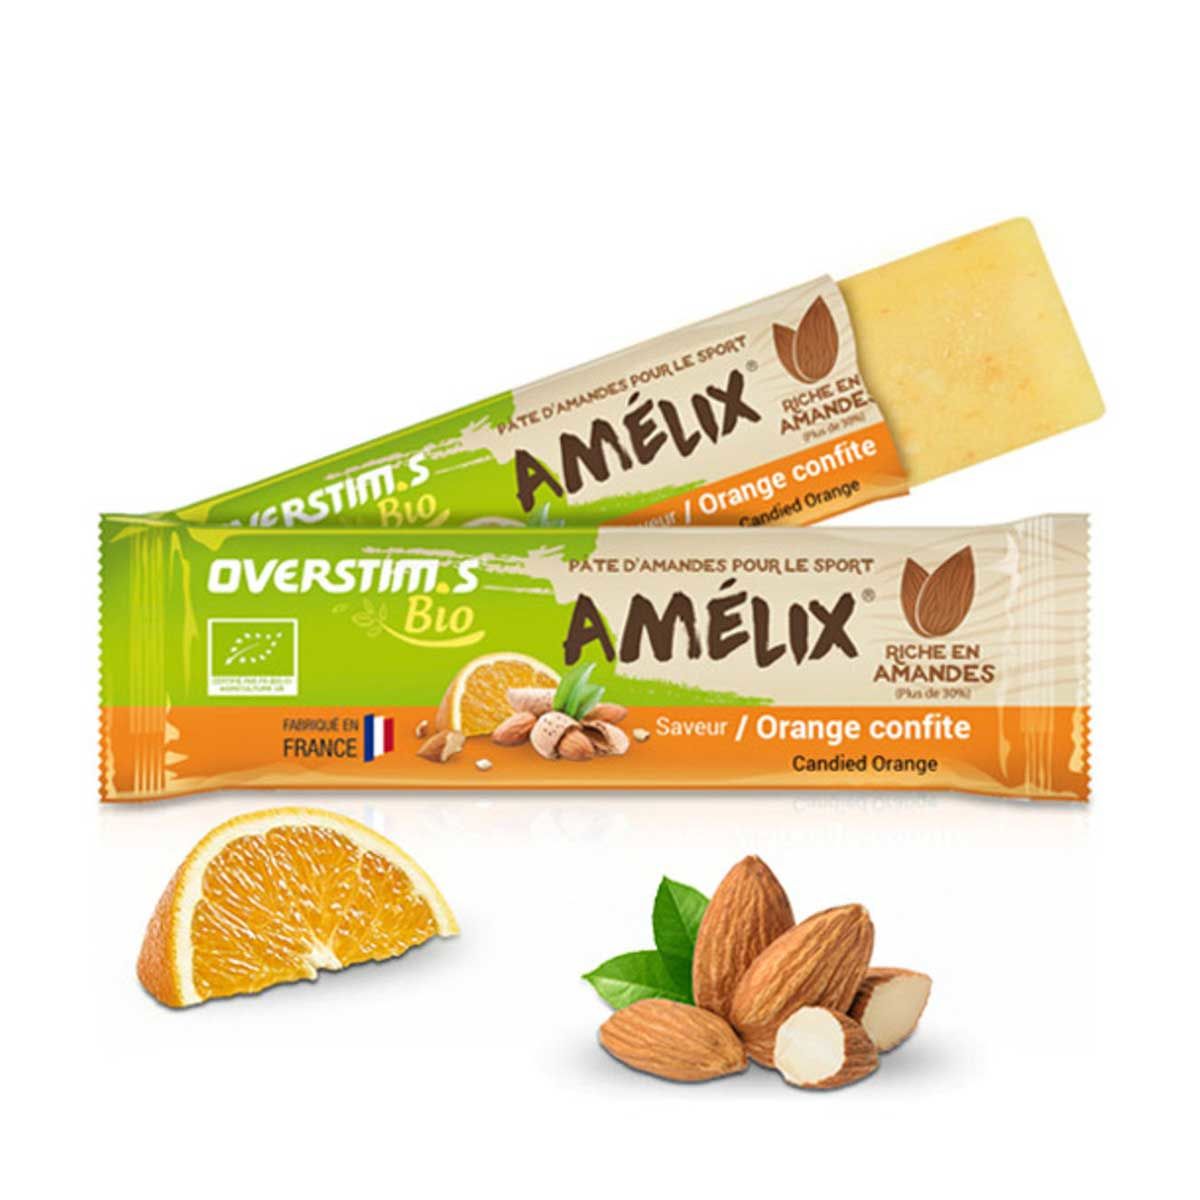 Overstim.s organic Amelix energy bar - Orange